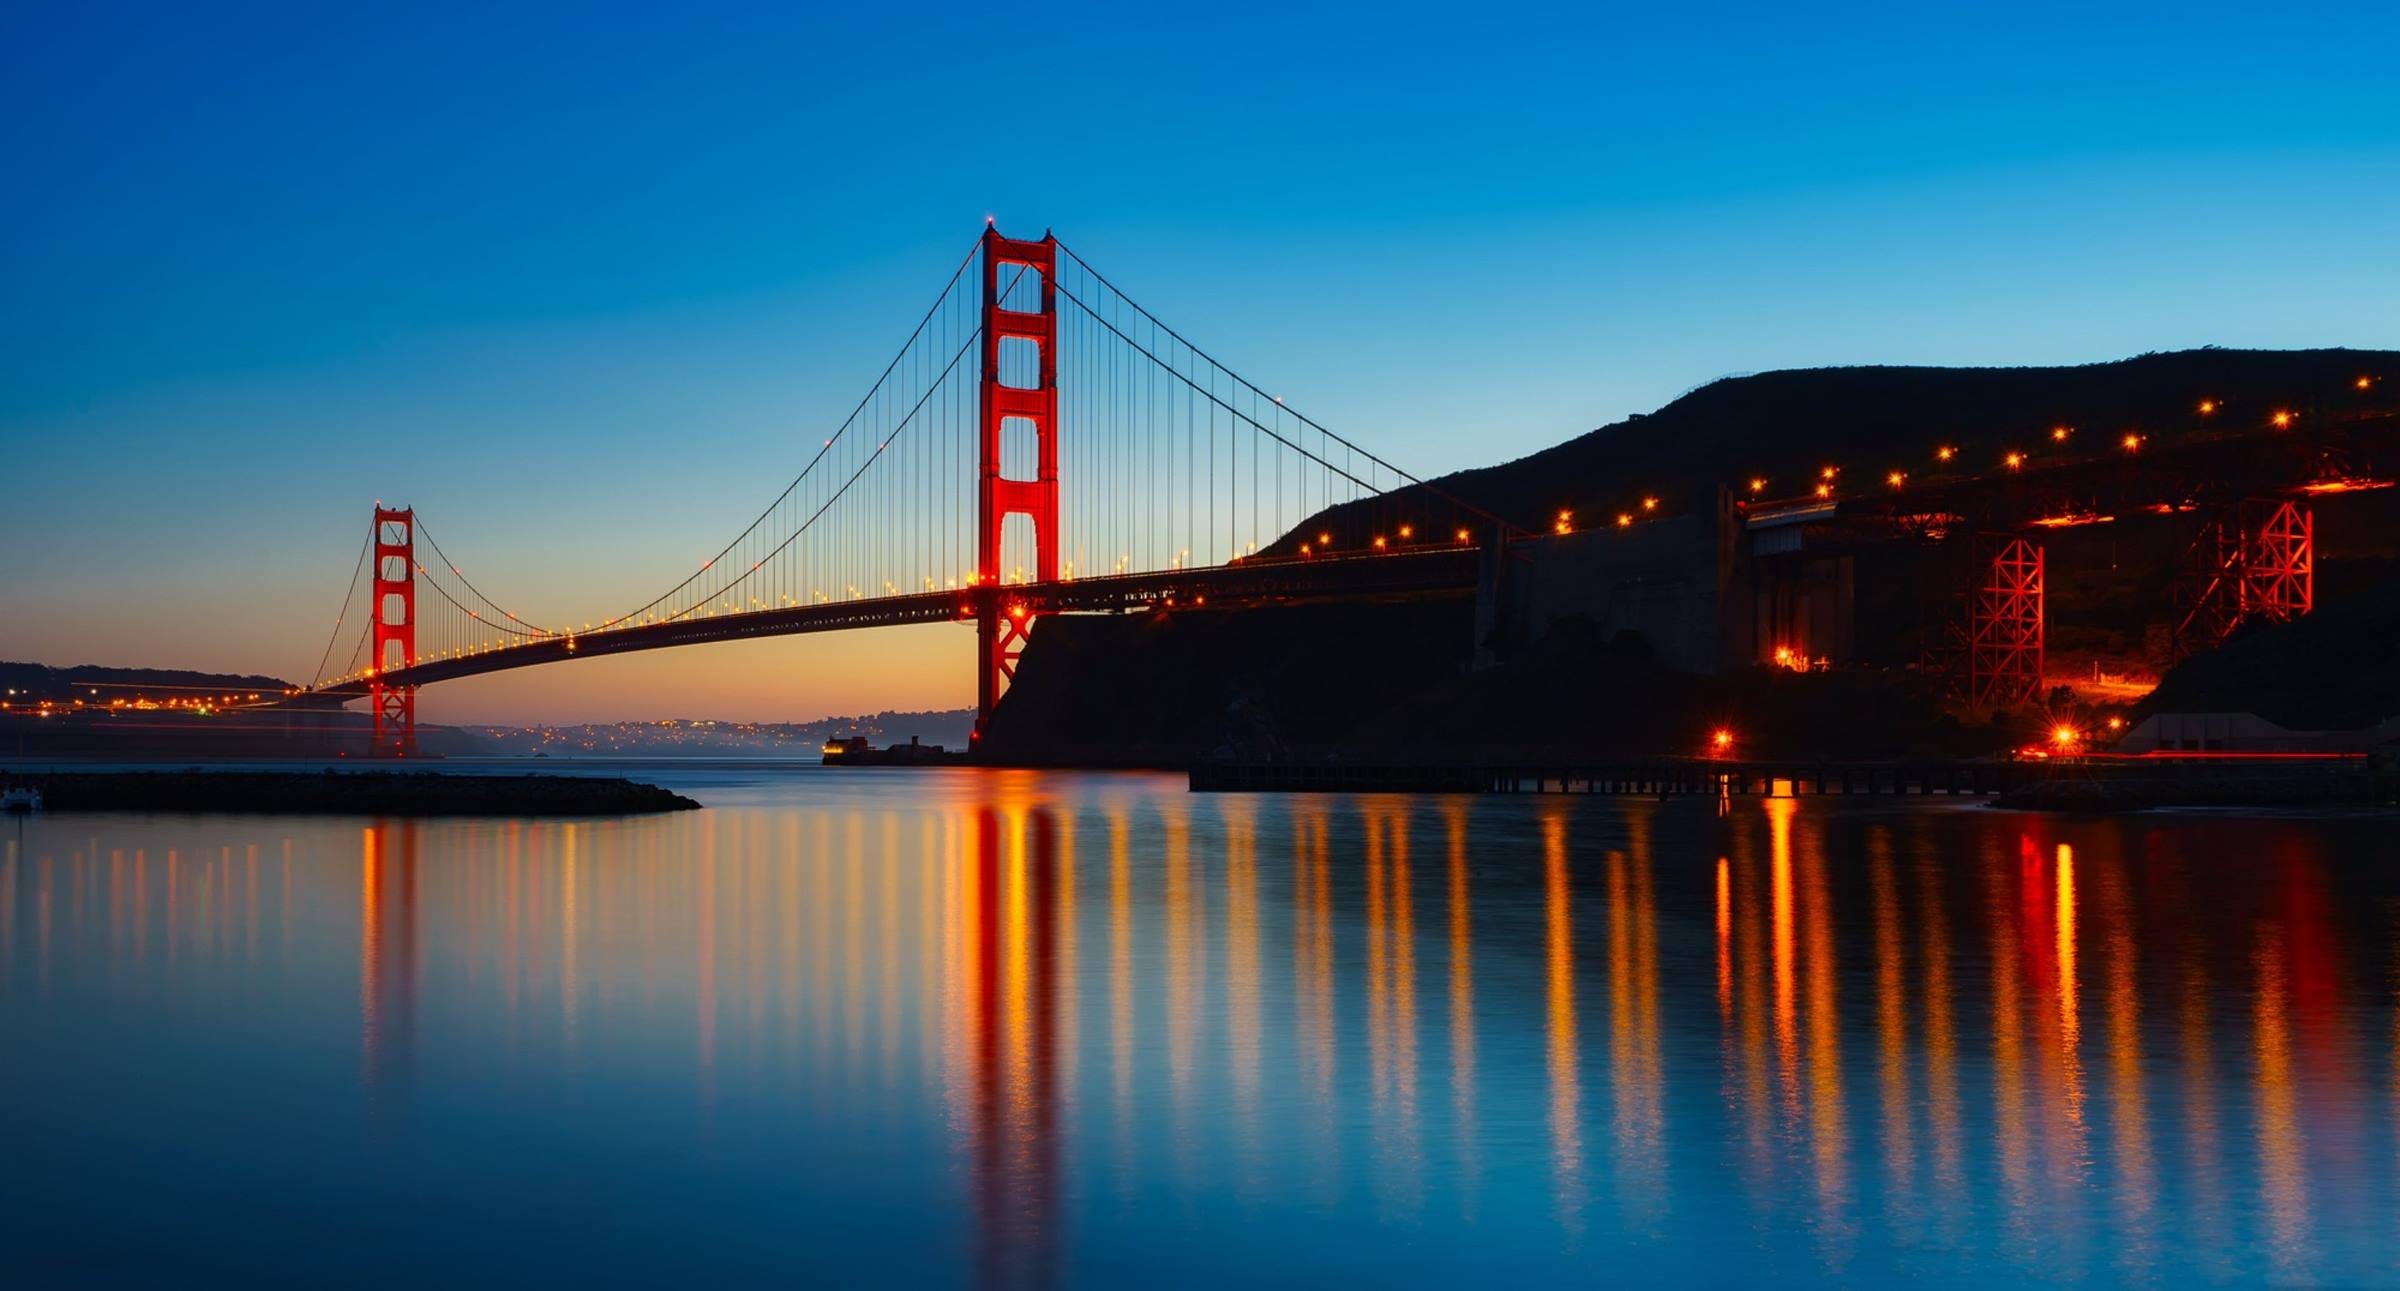 Free san francisco california golden gate bridge night relection - Image